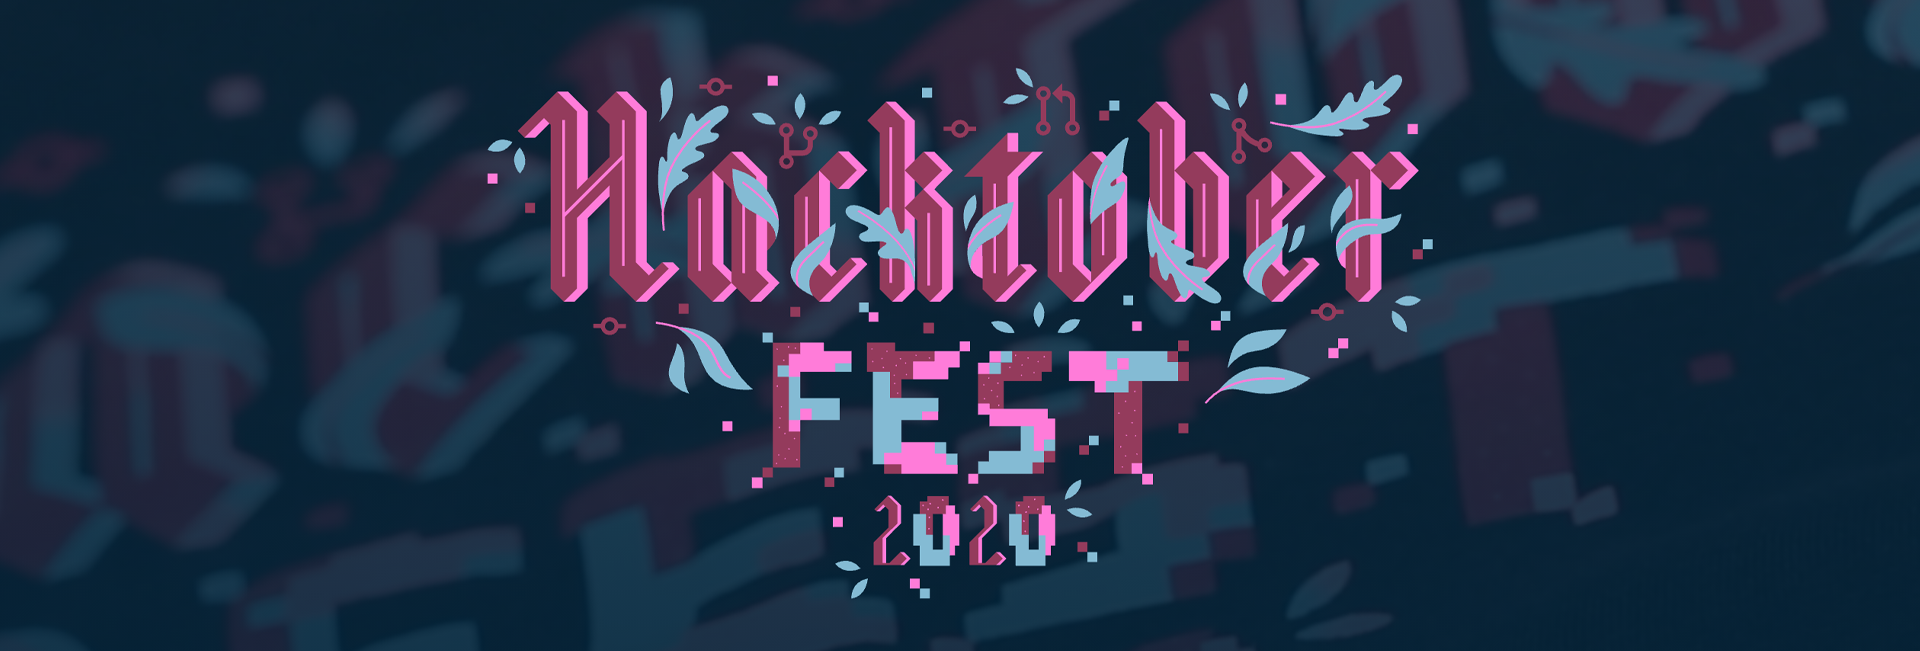 Hacktoberfest 2020